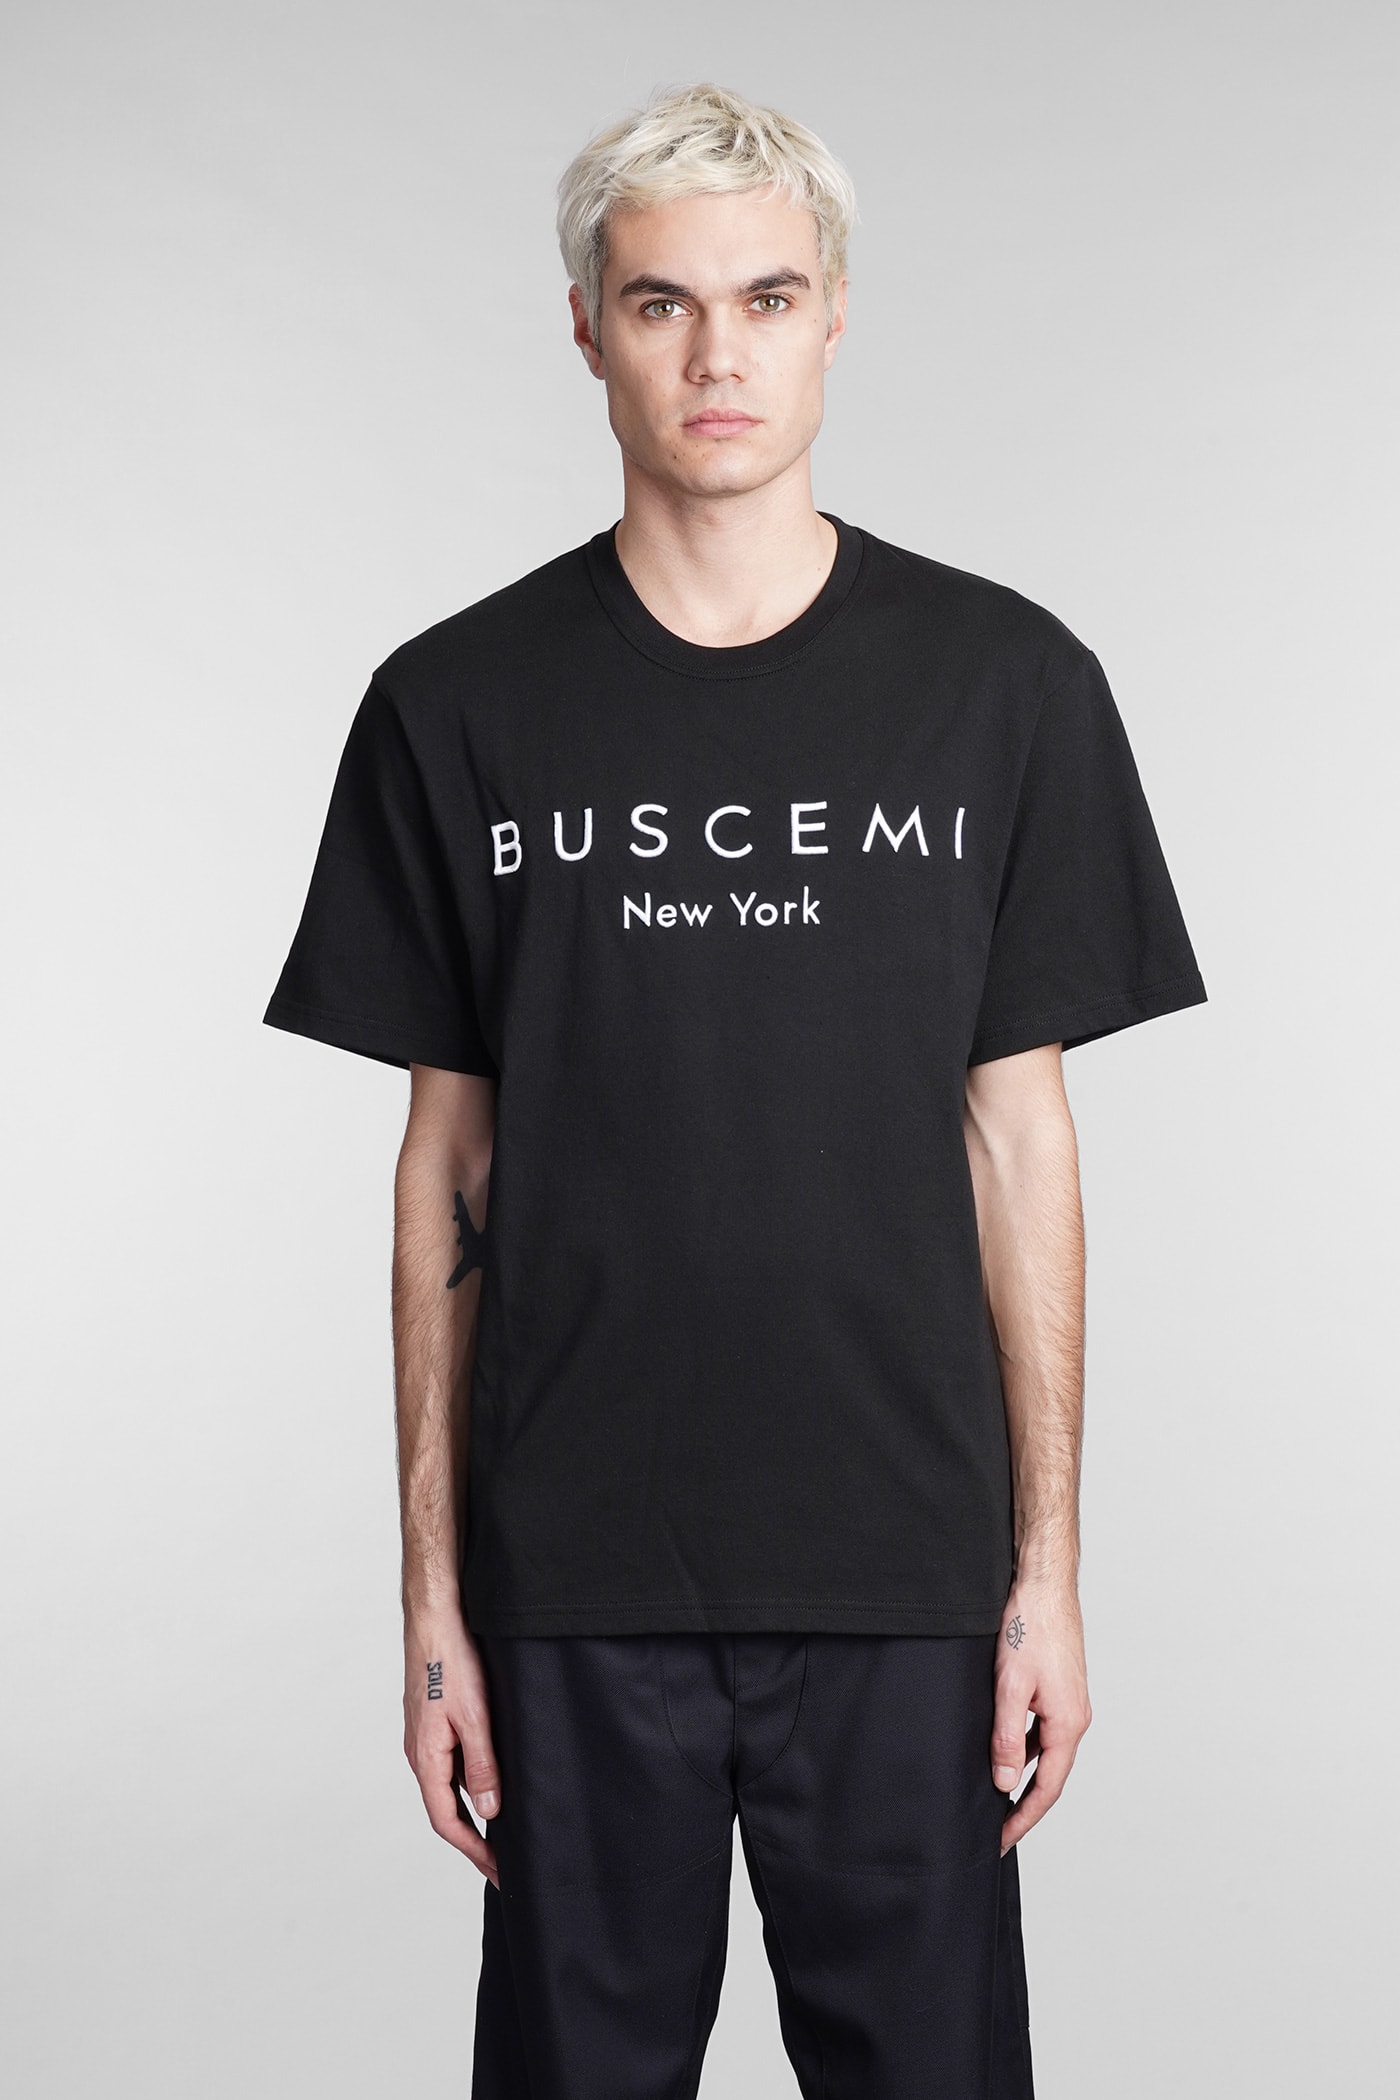 BUSCEMI T-SHIRT IN BLACK COTTON